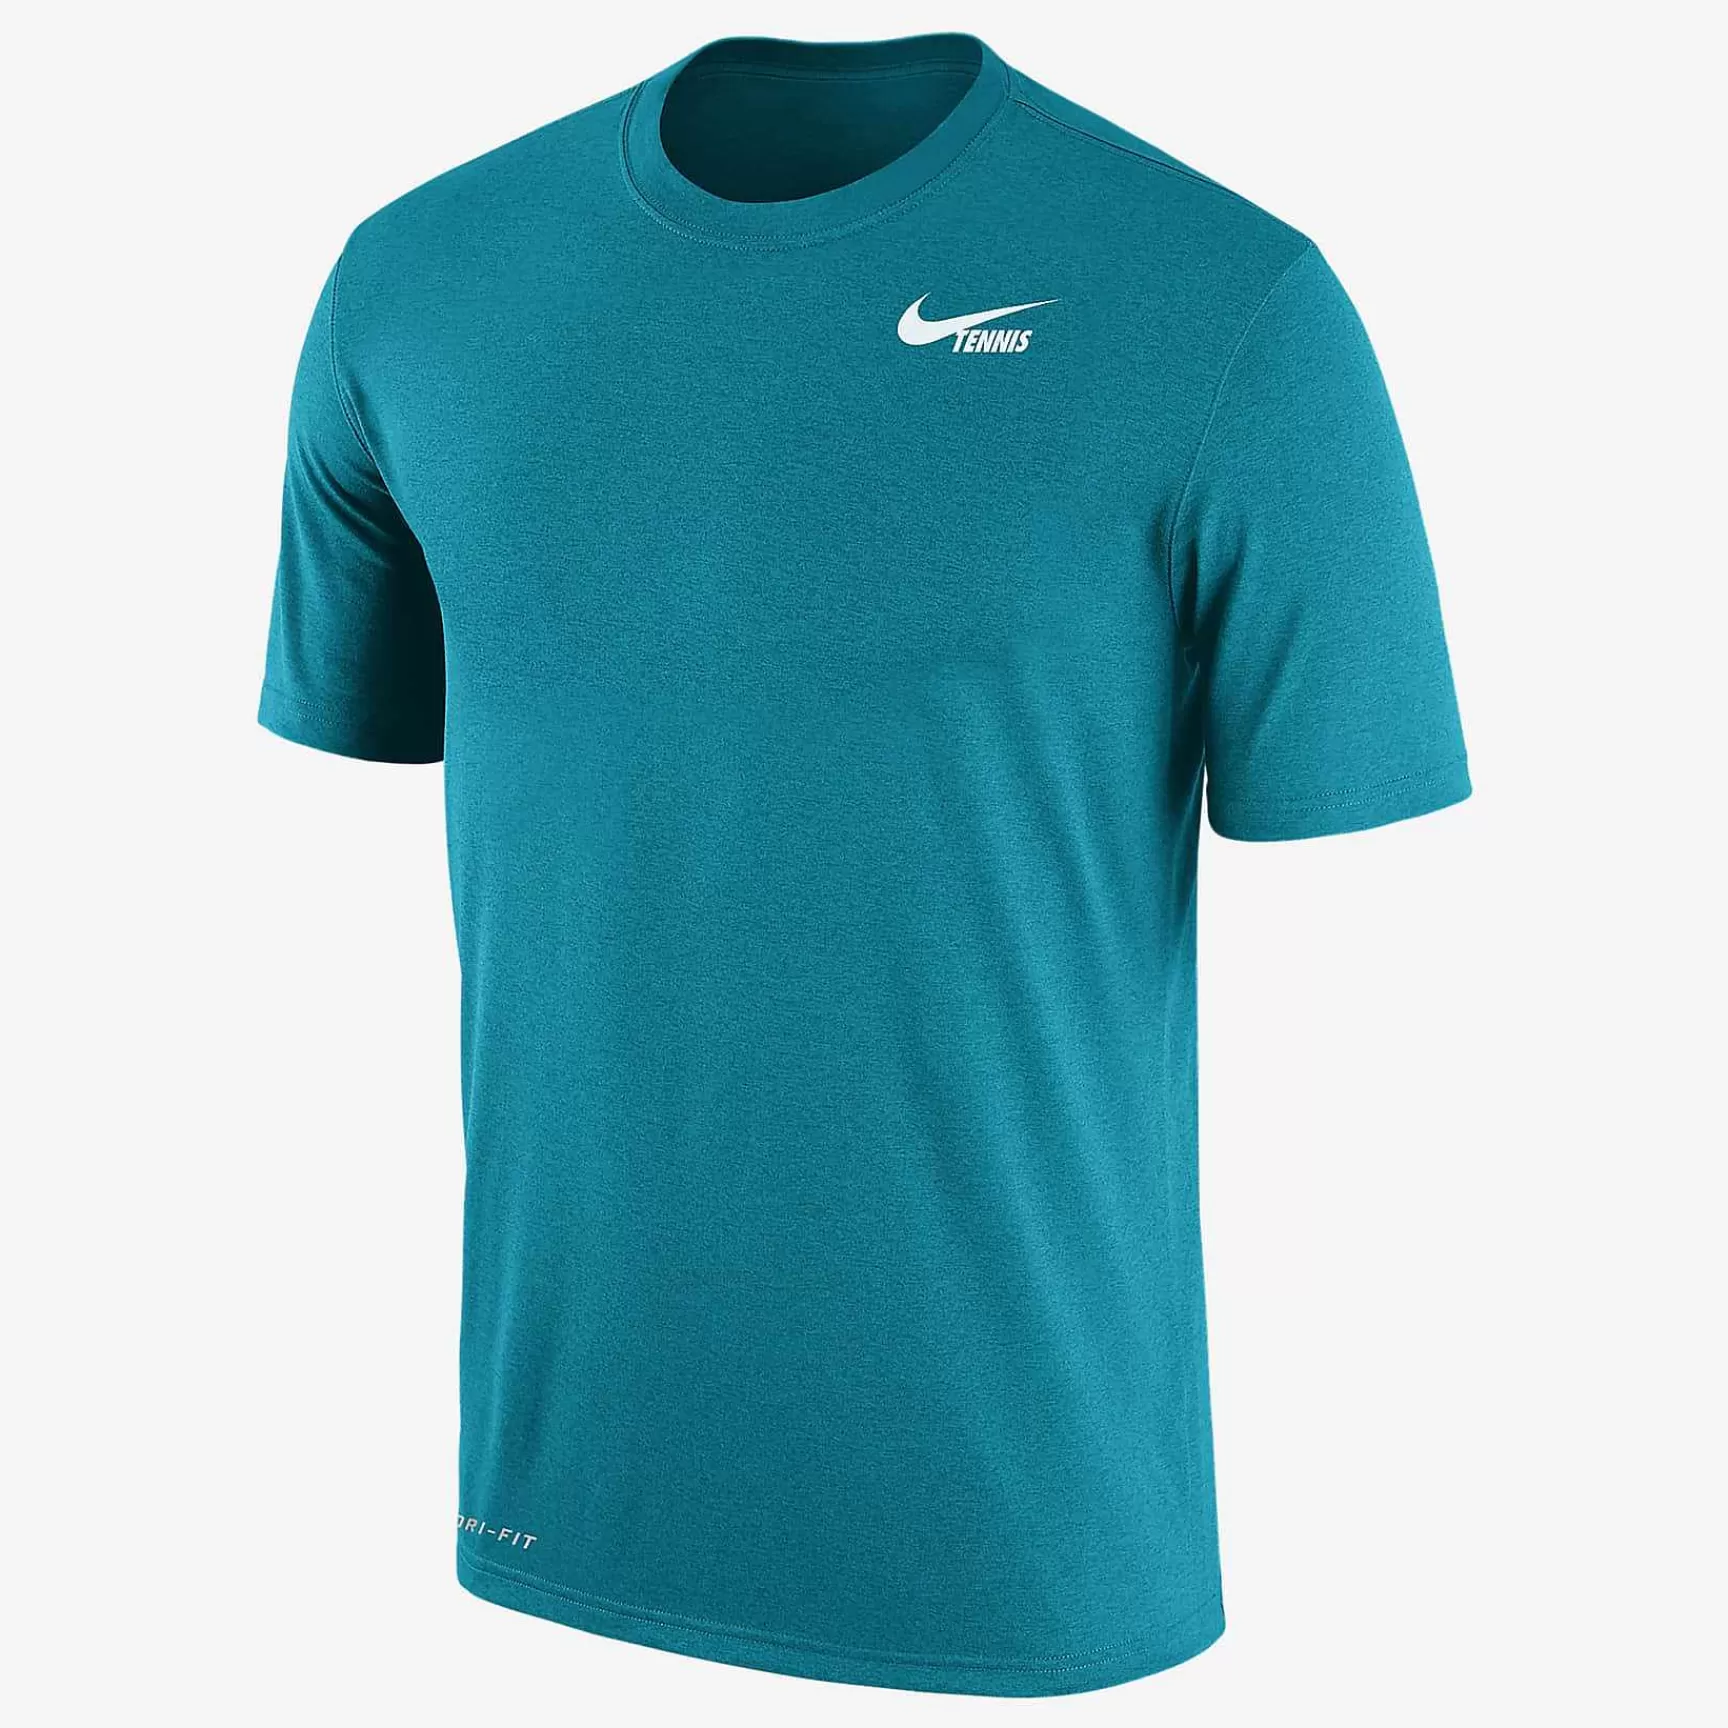 Mezczyzni Nike Topy I T-Shirty | Drifit